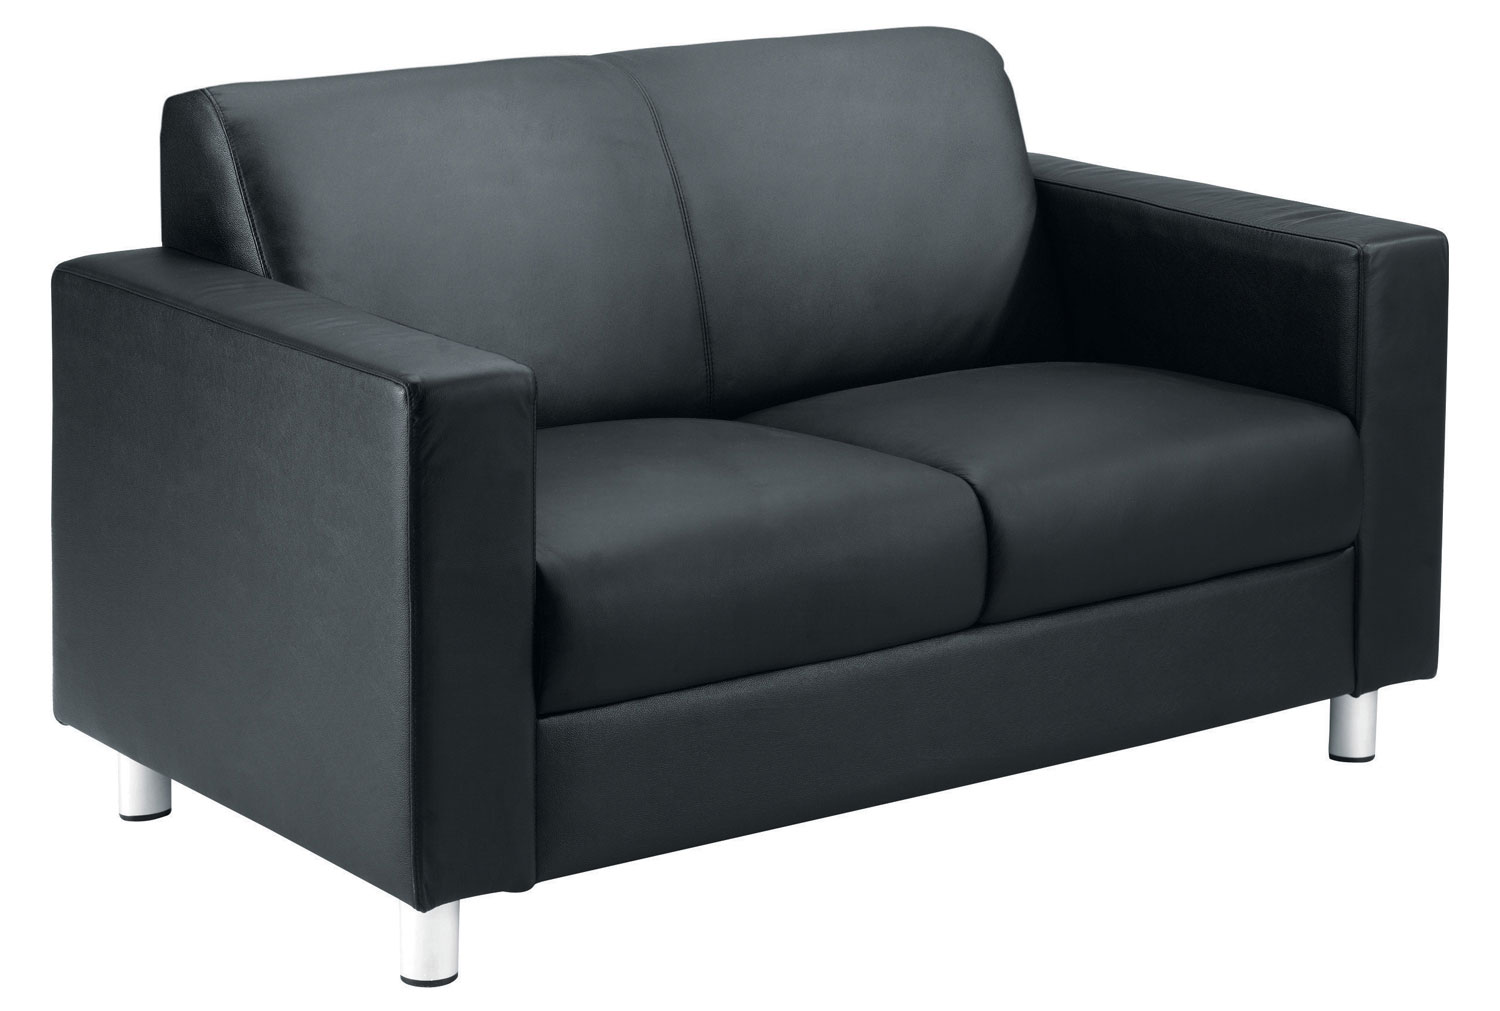 Tobins 2 Seater Leather Sofa, Black